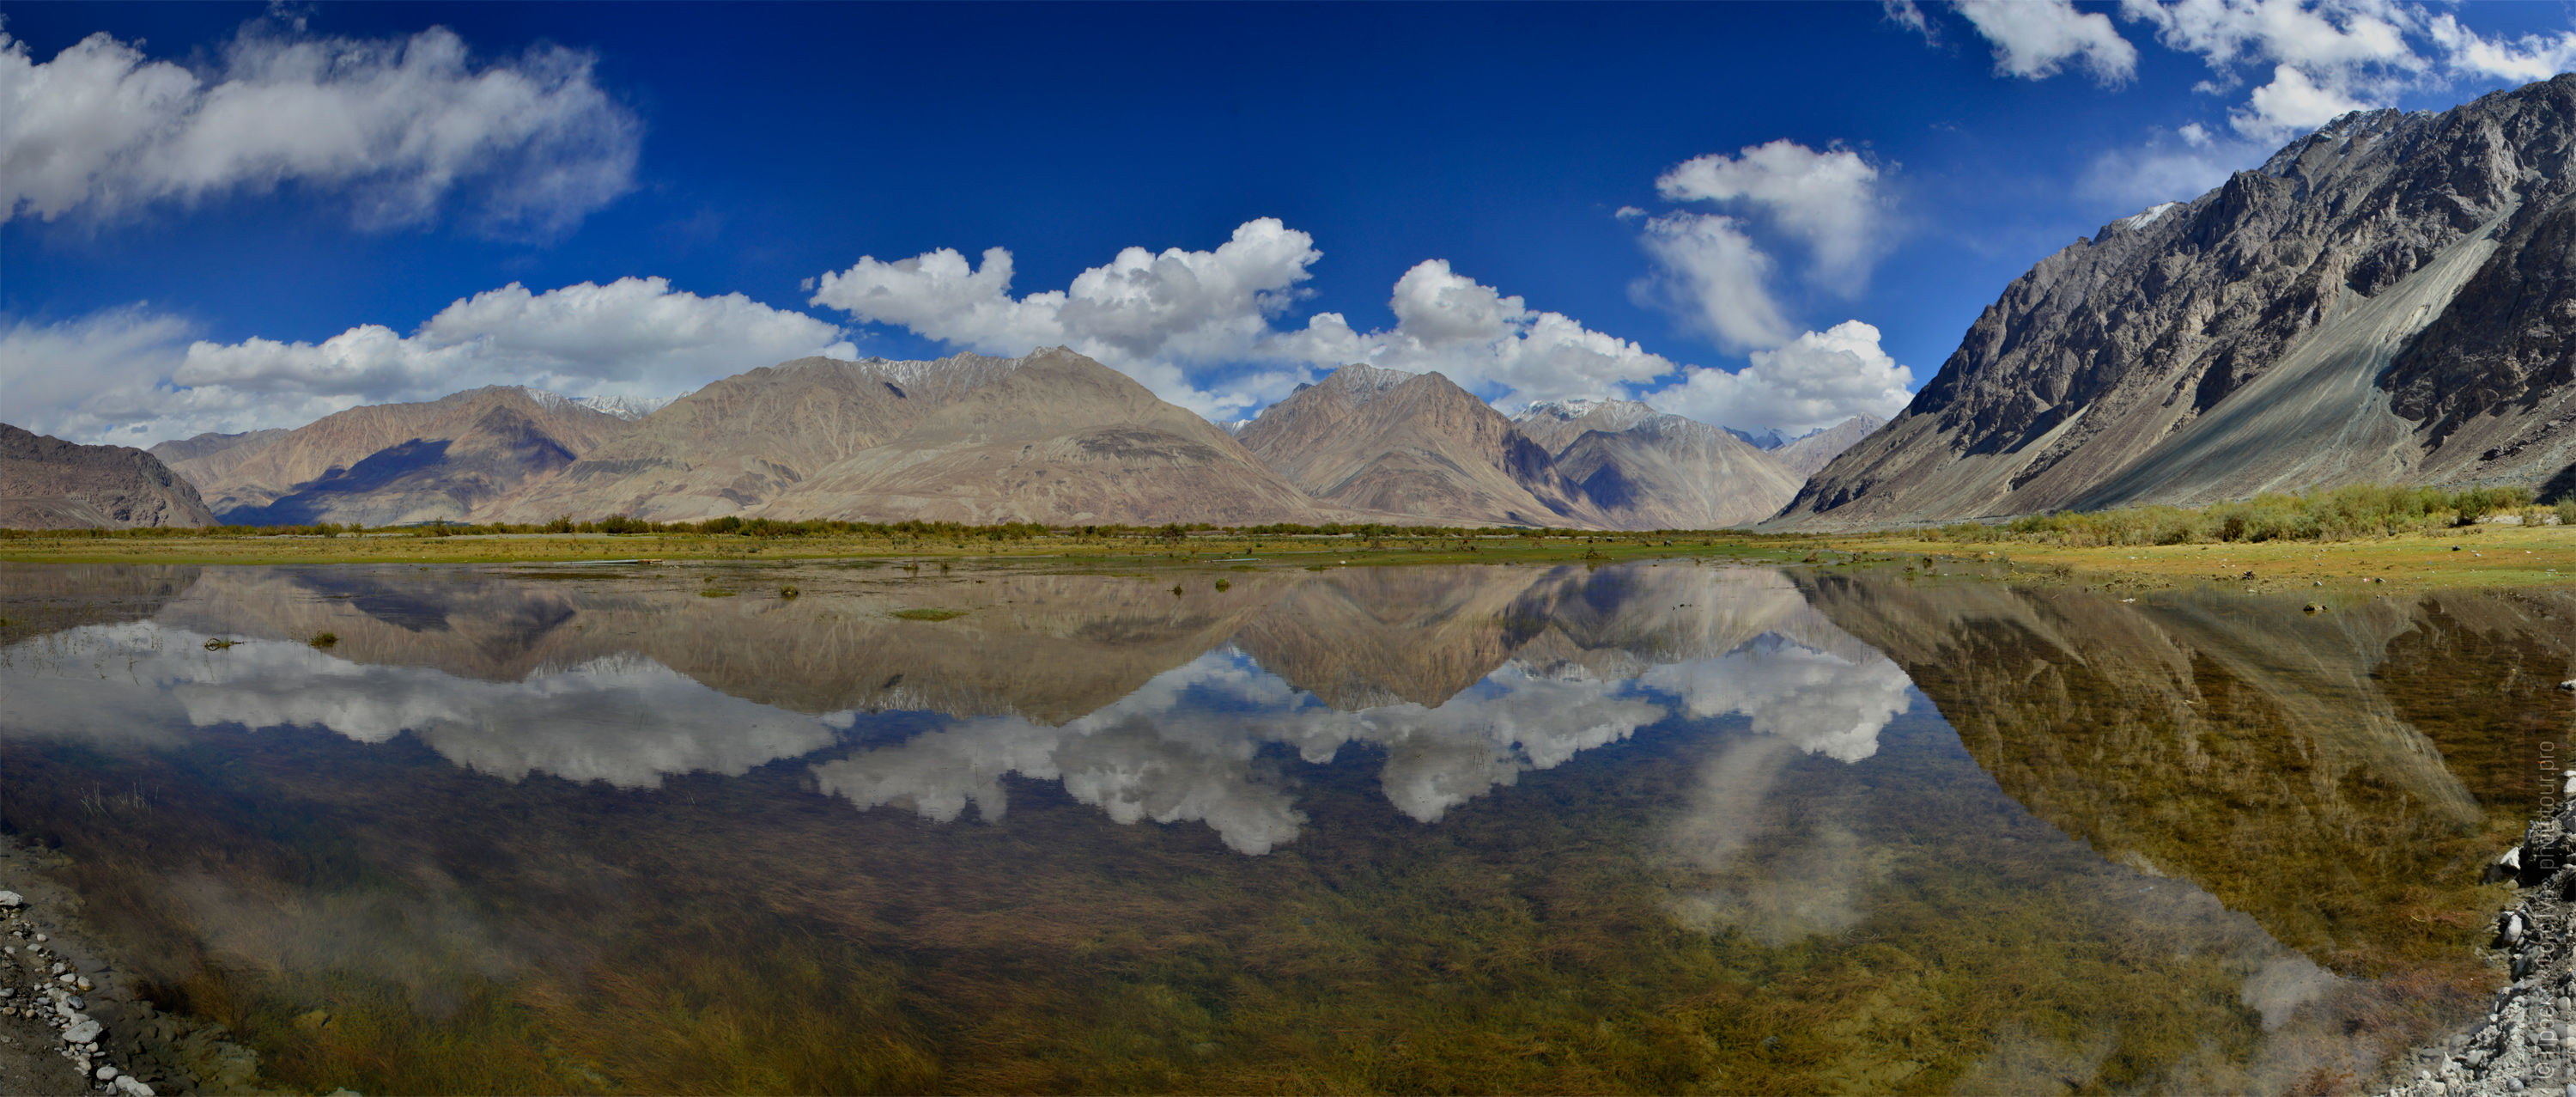 Lakes of the Nubra valley. Tour Legends of Tibet: Ladakh, Lamayuru, Da Khan and Nubra, 19.09. - 28.09.2019.